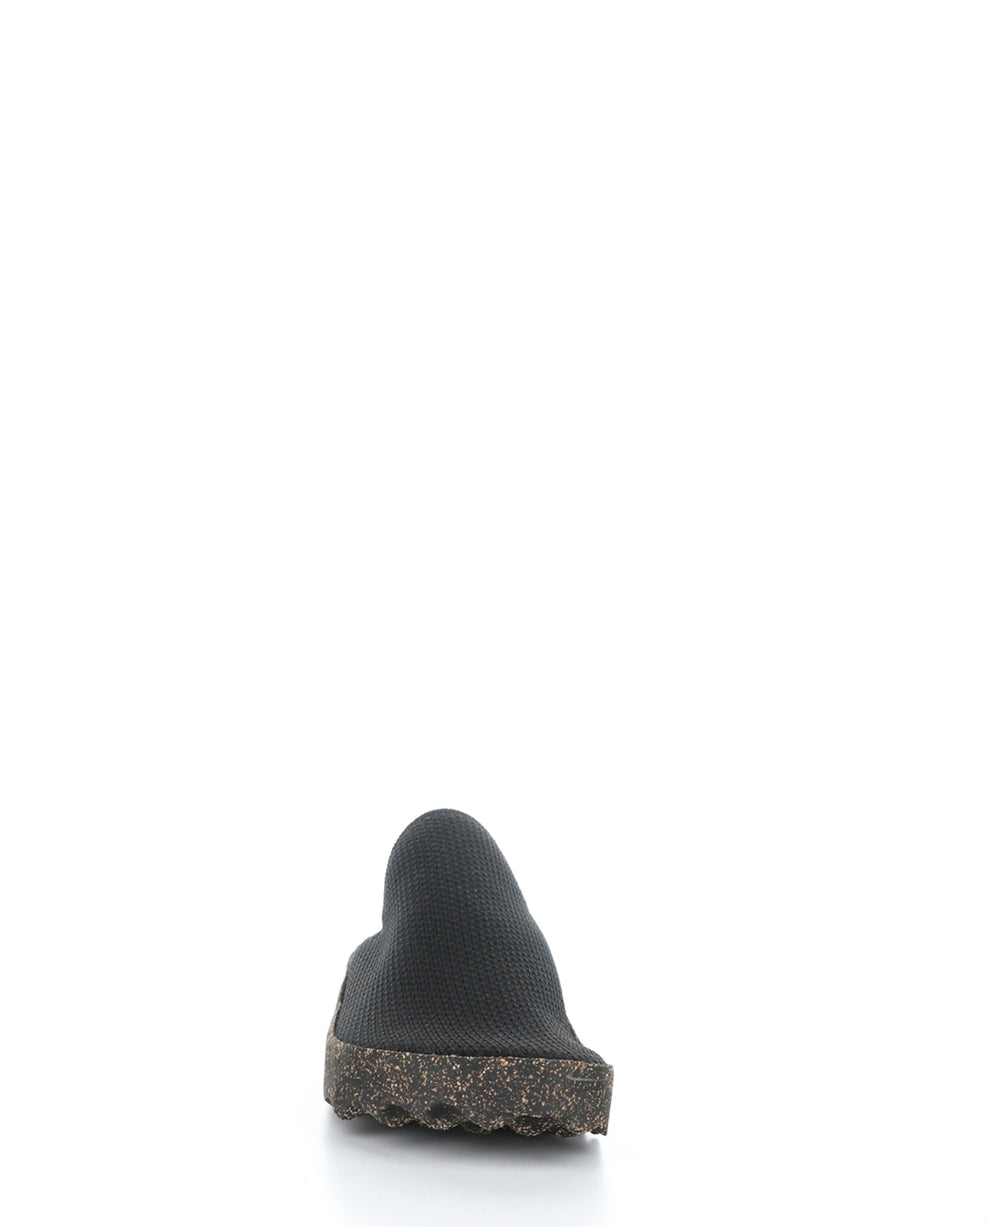 CLOG105ASPM BLACK Slip-on Shoes|CLOG105ASPM Chaussures à Bout Rond in Noir